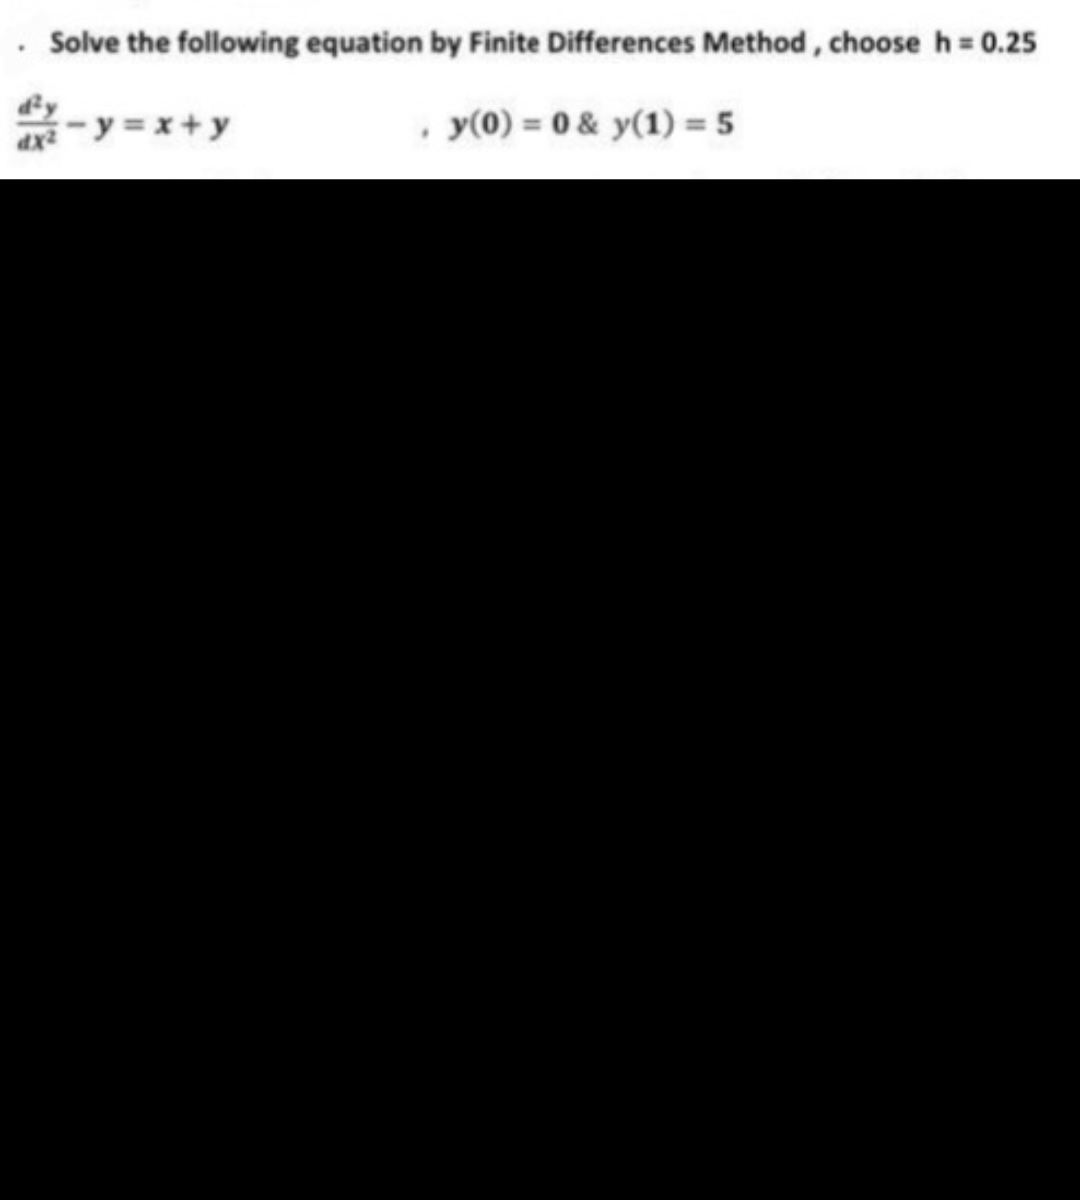 . Solve the following equation by Finite Differences Method, choose h = 0.25
. y(0) = 0 & y(1) = 5
4x²-y=x+y